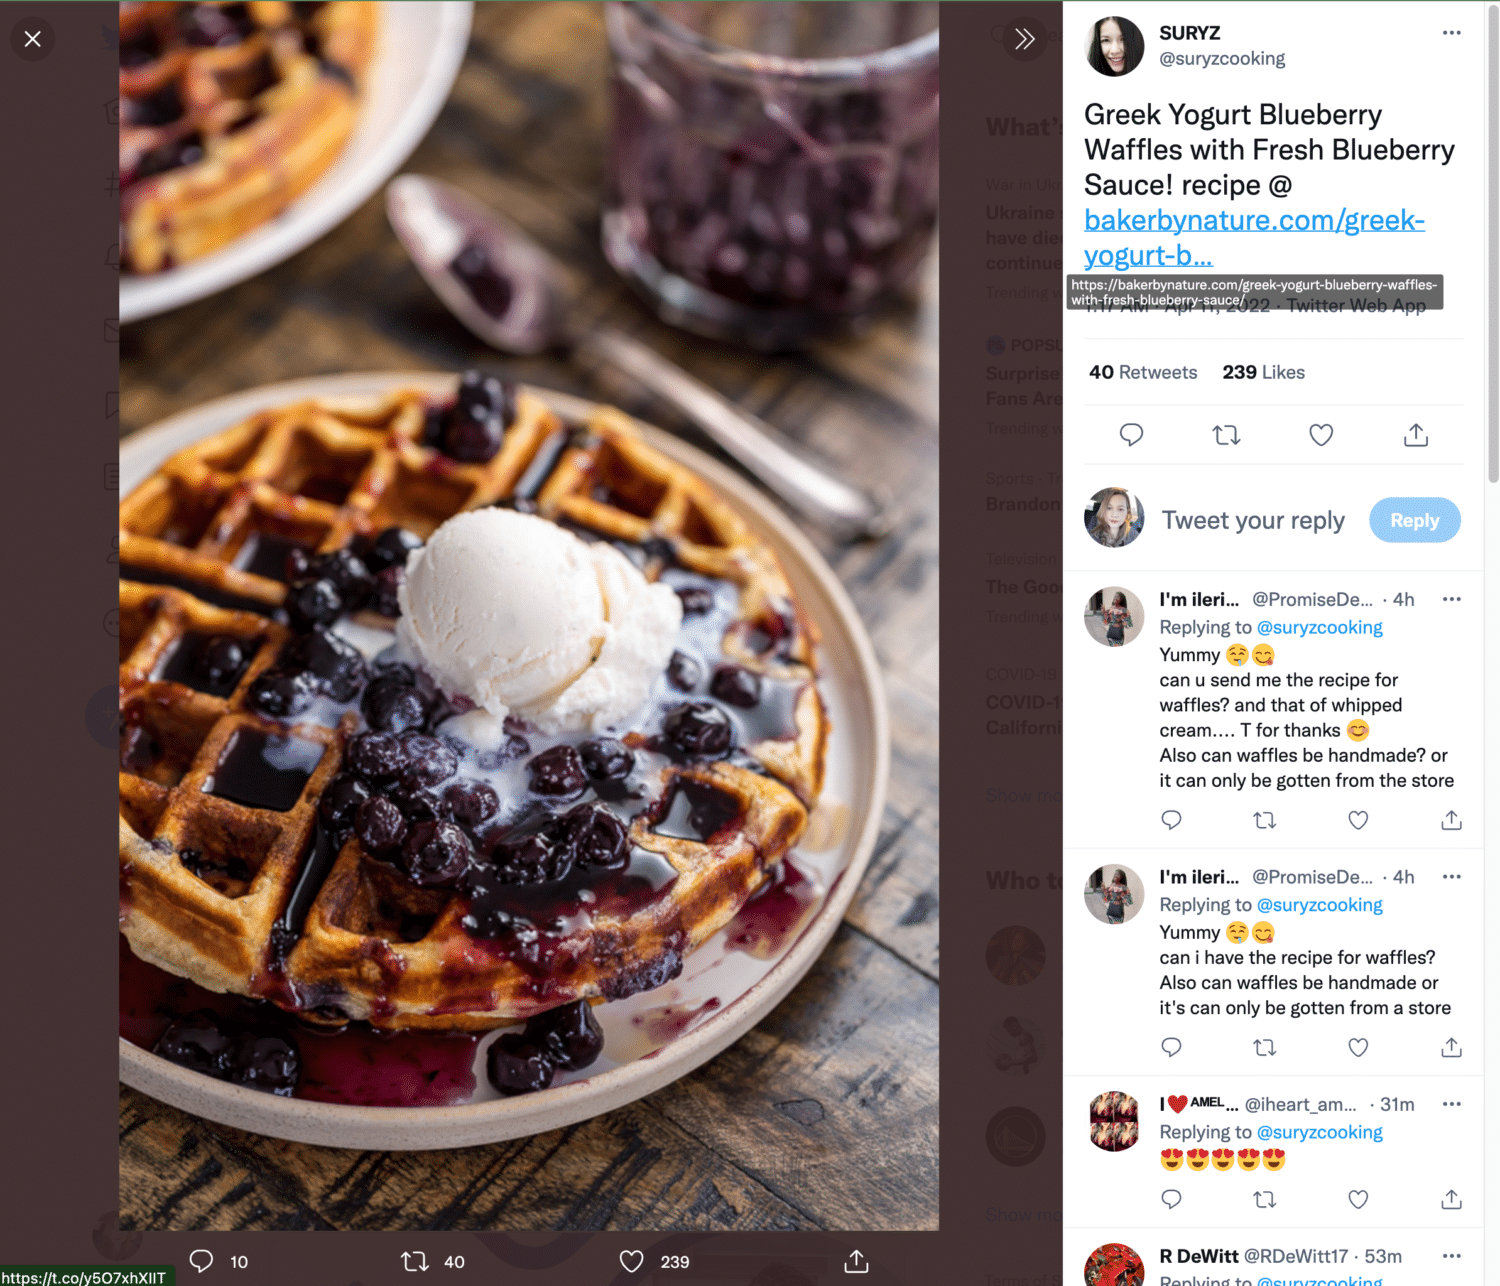 view yummy waffles Twitter image on desktop